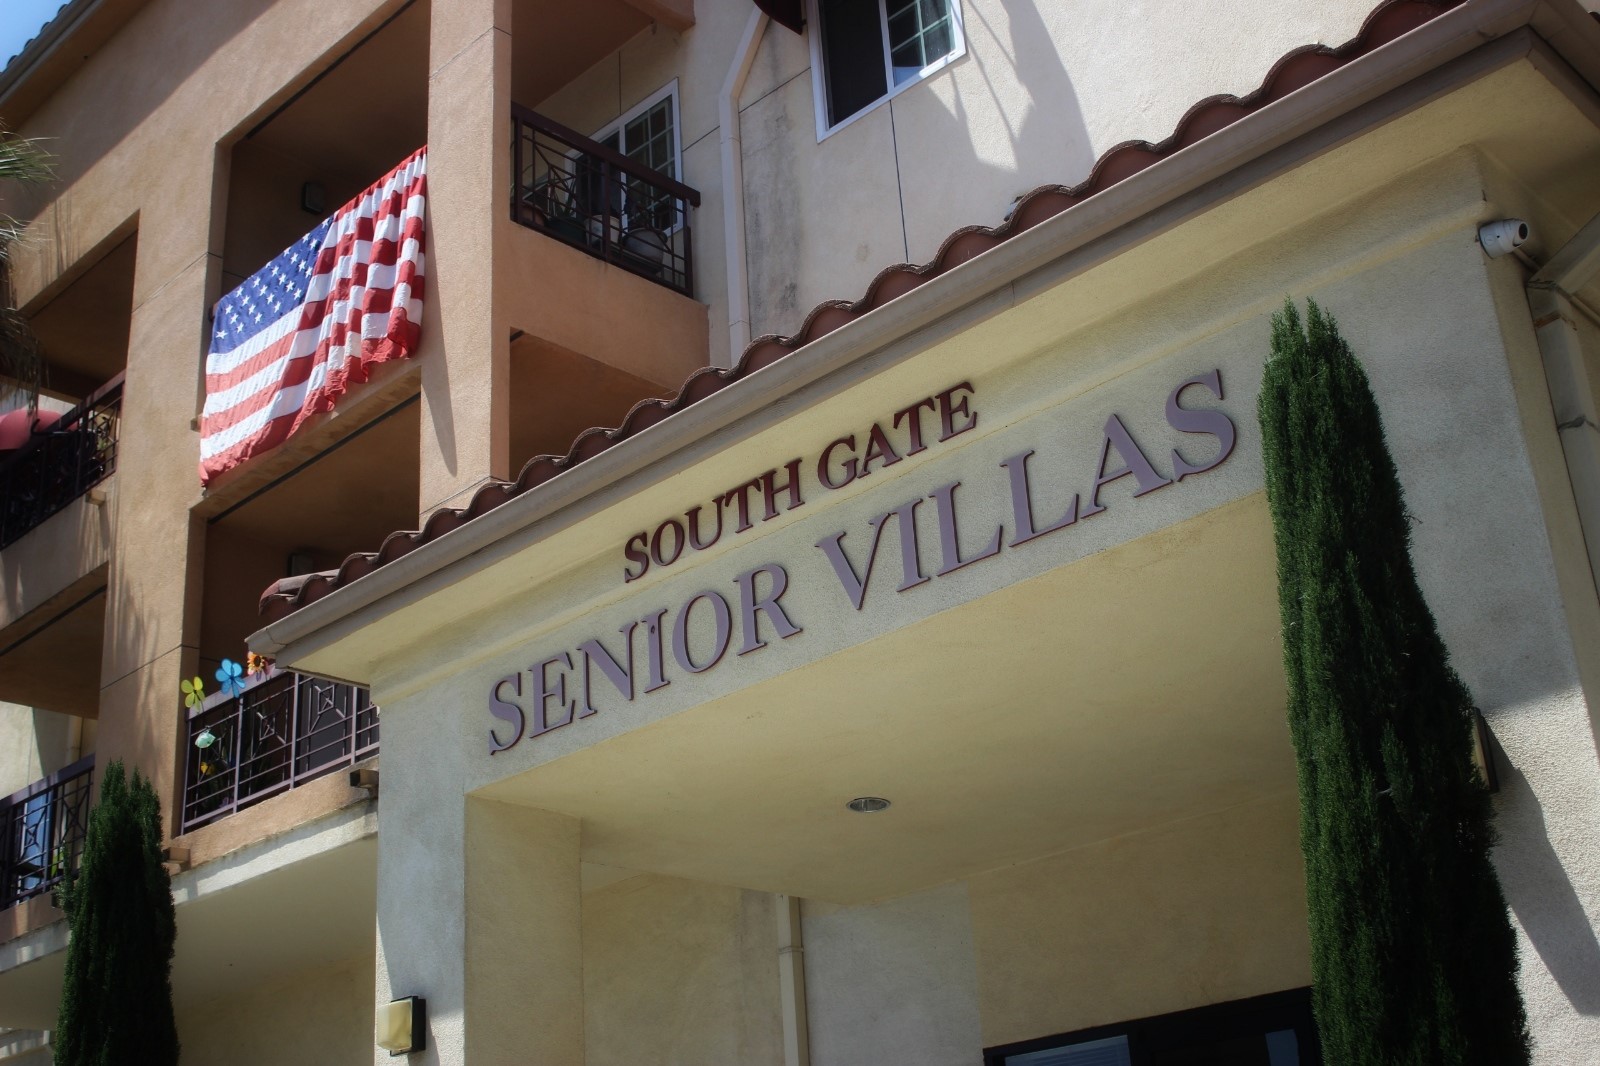 South Gate Senior Villas front entrance